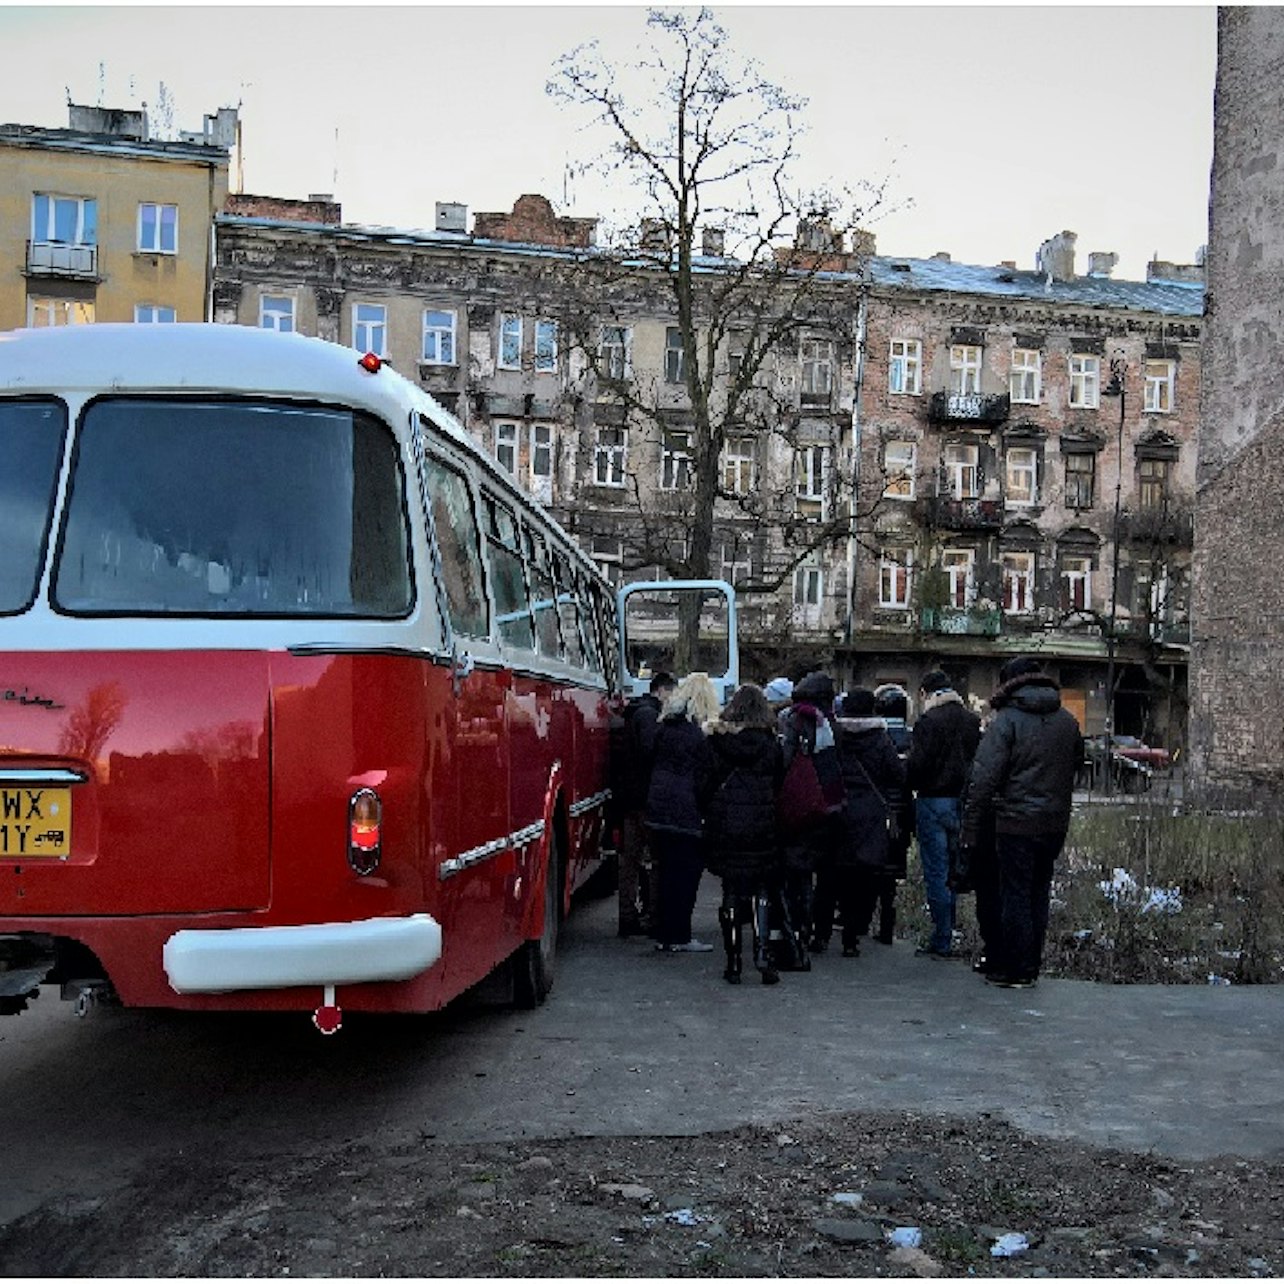 Tour en bus retro: El lado oscuro de Varsovia - Alojamientos en Varsovia